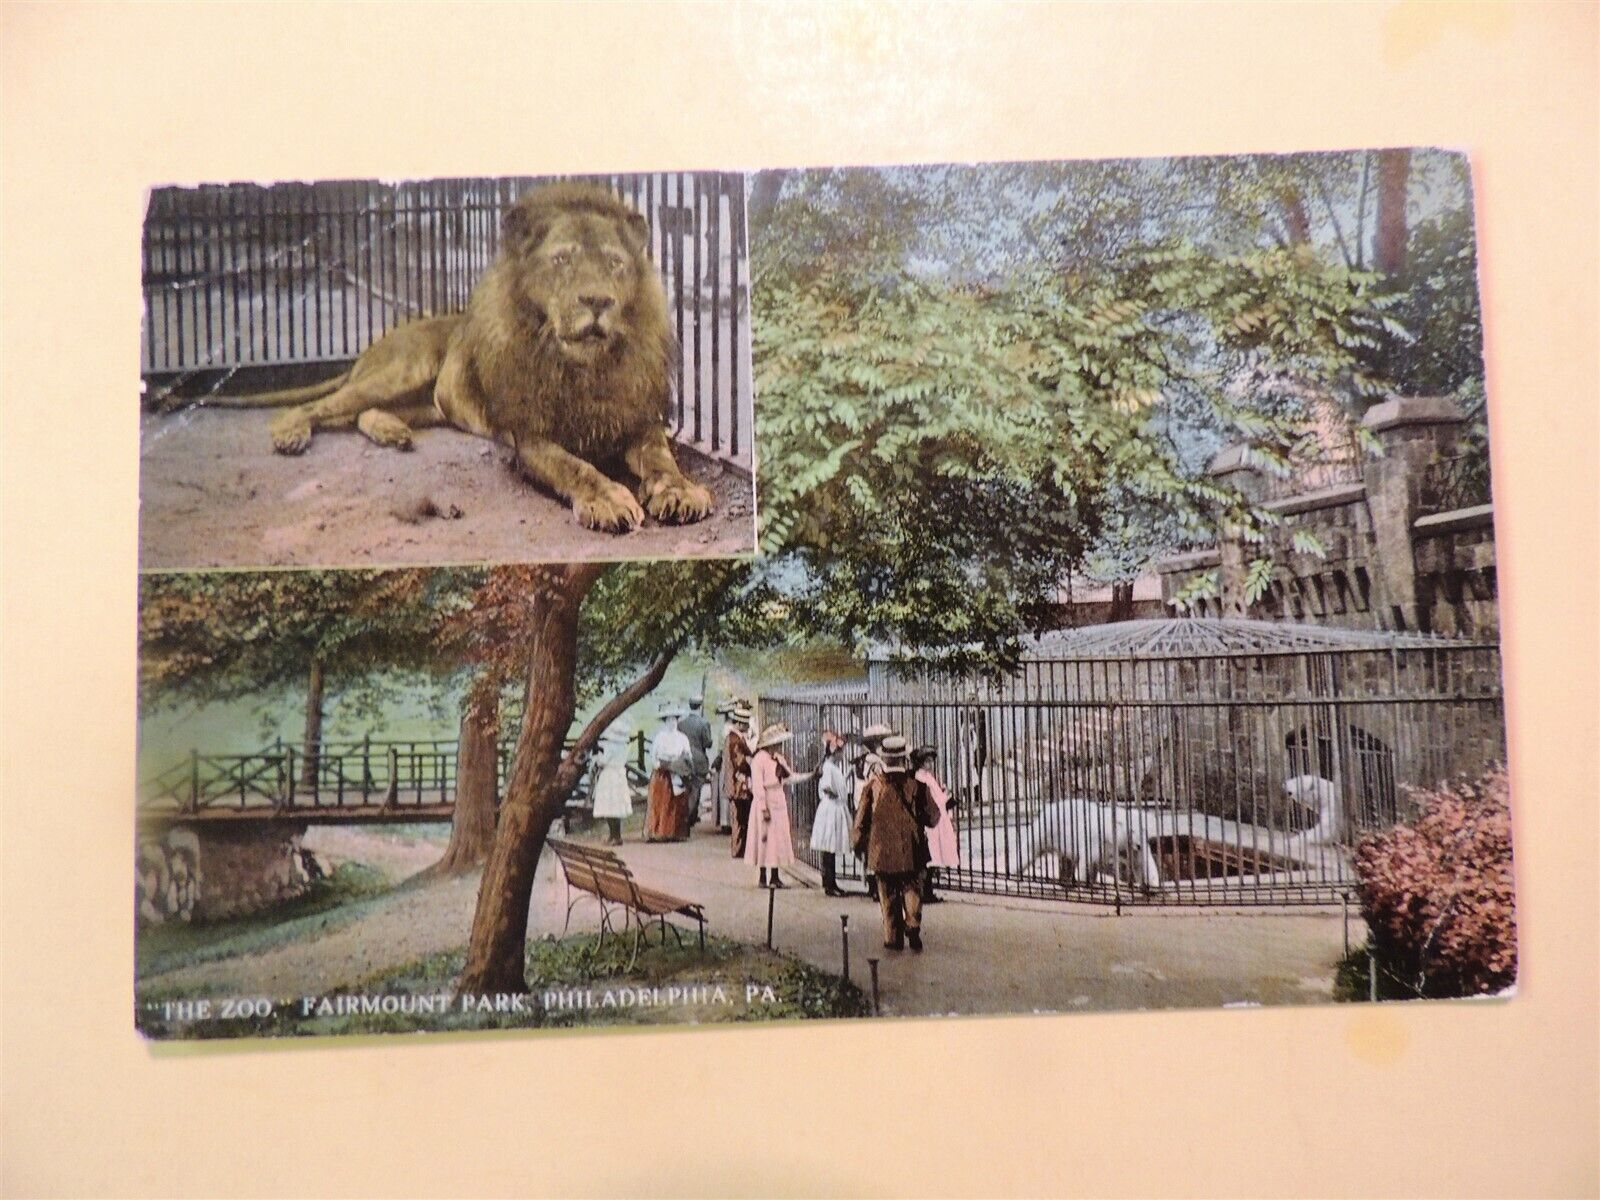 The Zoo Fairmount Park Philadephia Pennsylvania vintage postcard 